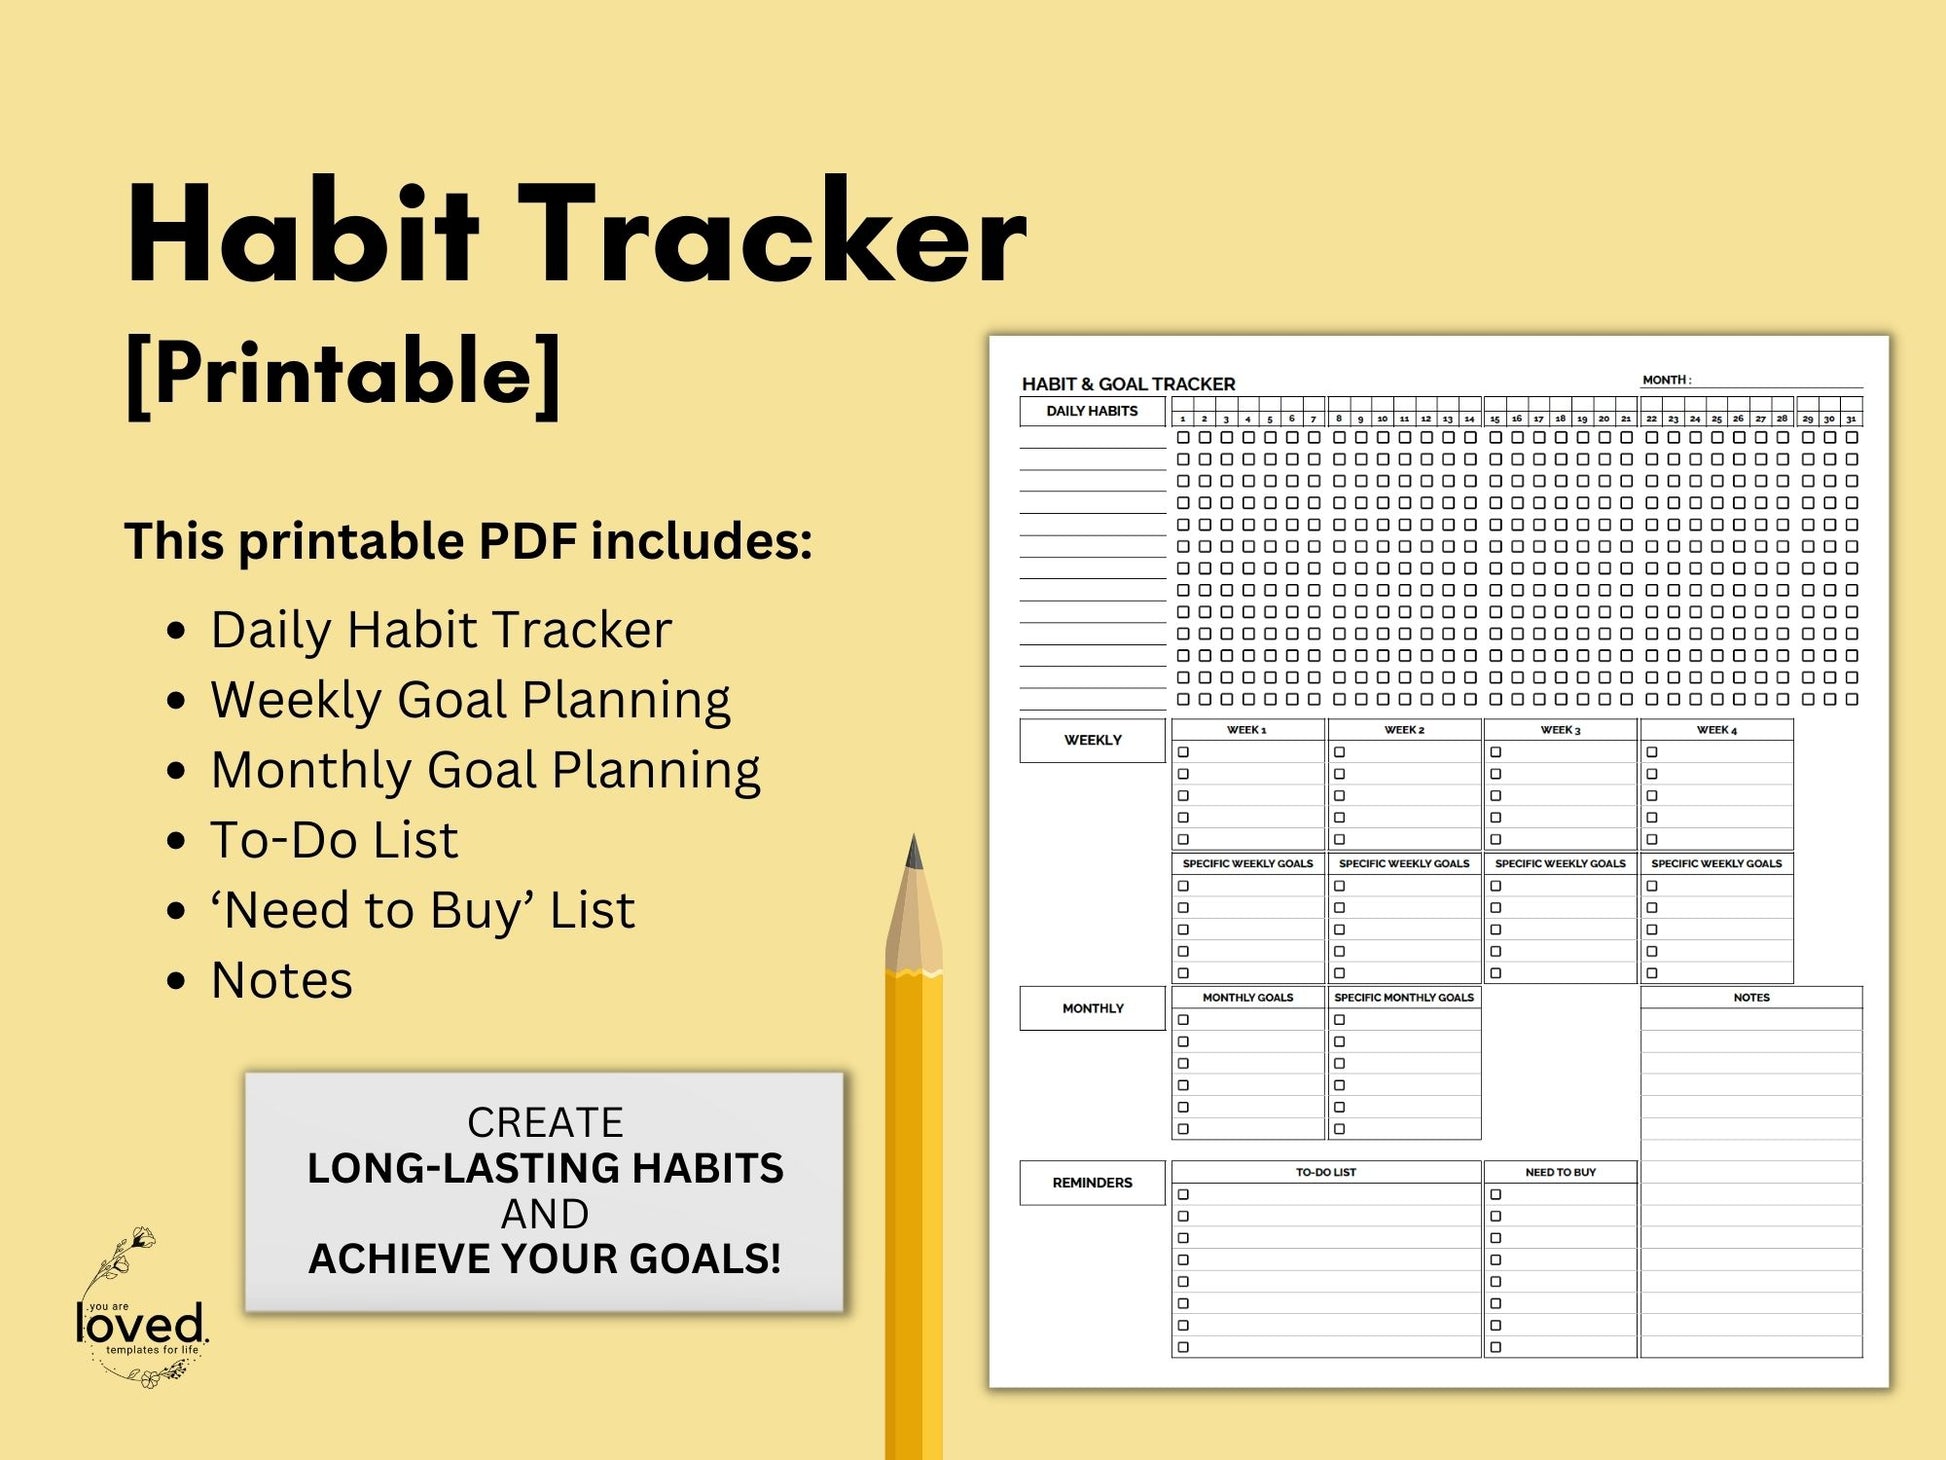 Habit Tracker Journal Goal Planner - Track Progress and Reach Goals Wi